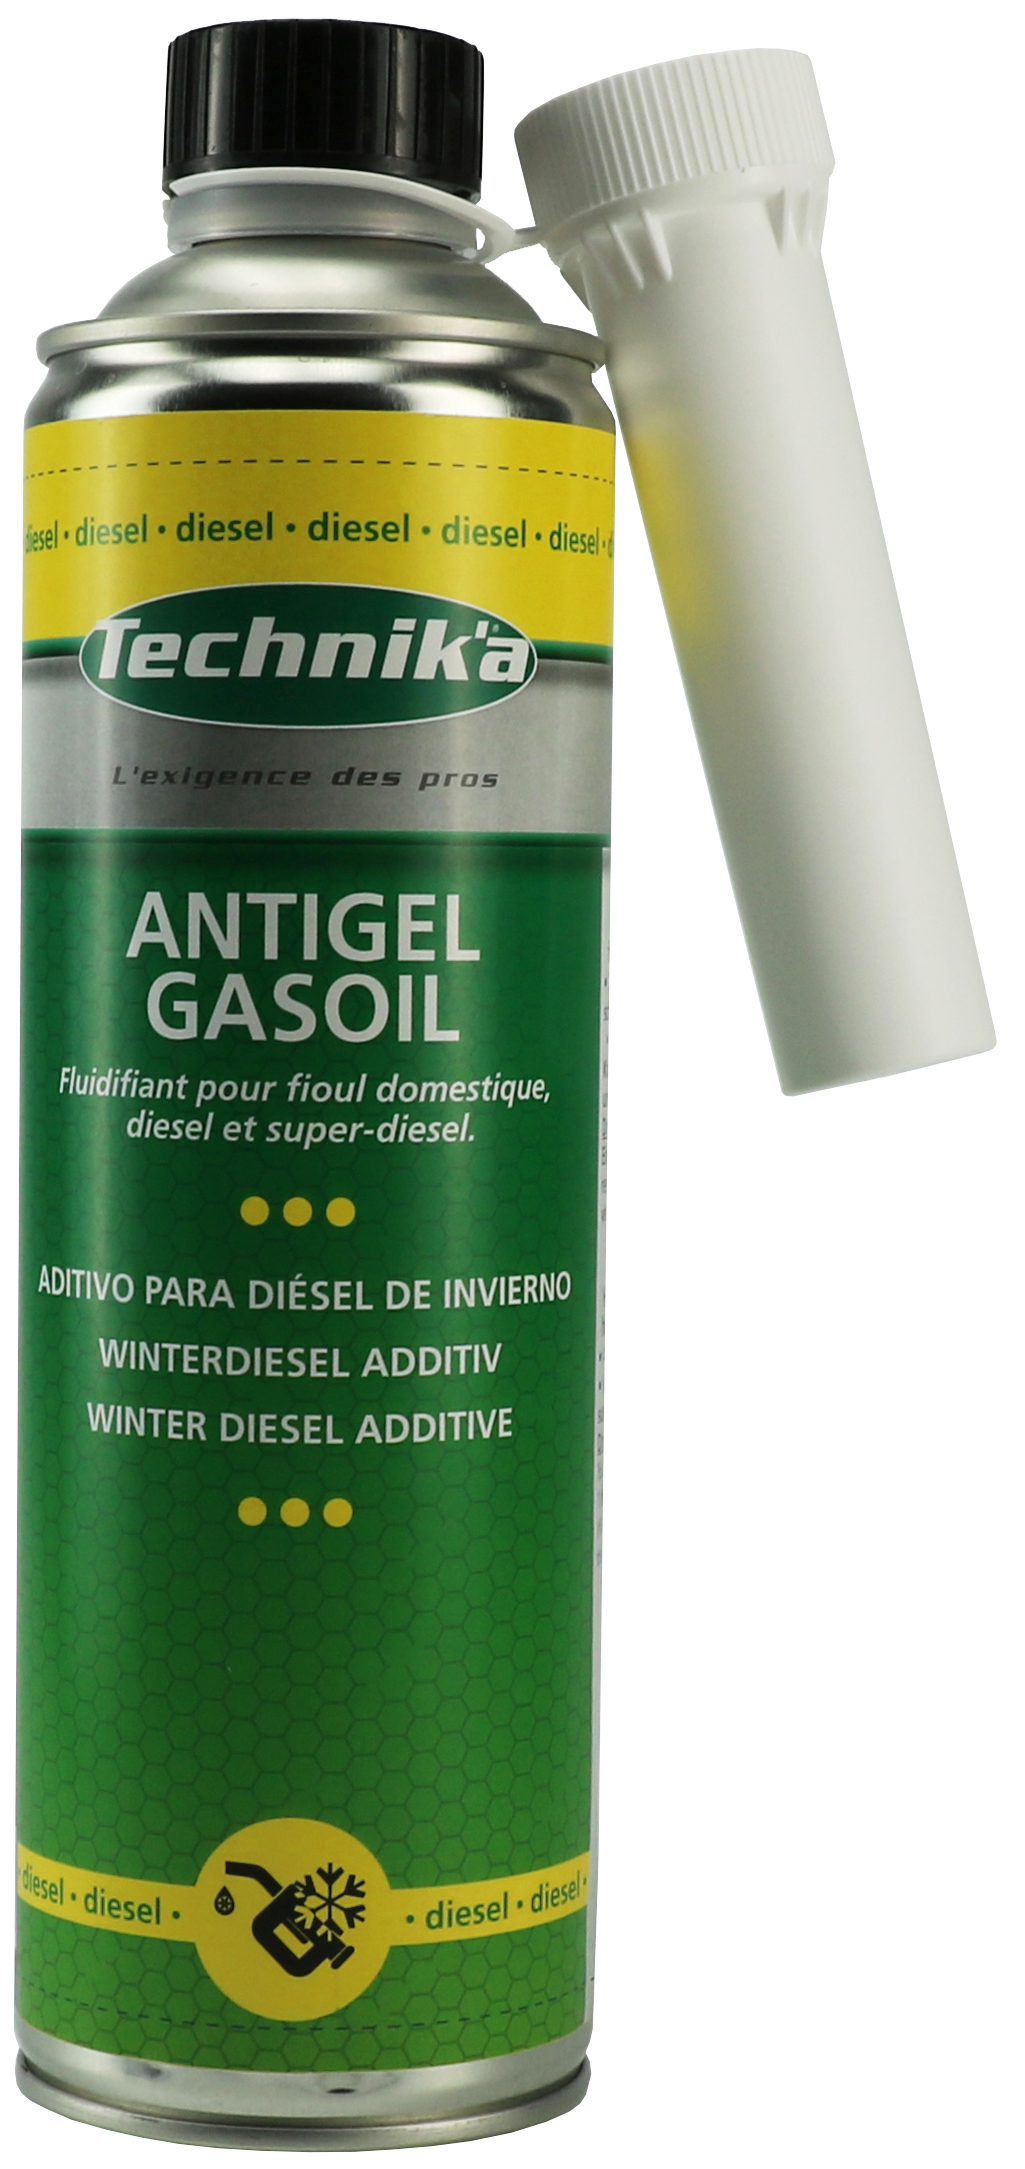 Additifs diesel - Antigel gasoil Technik'a 860104